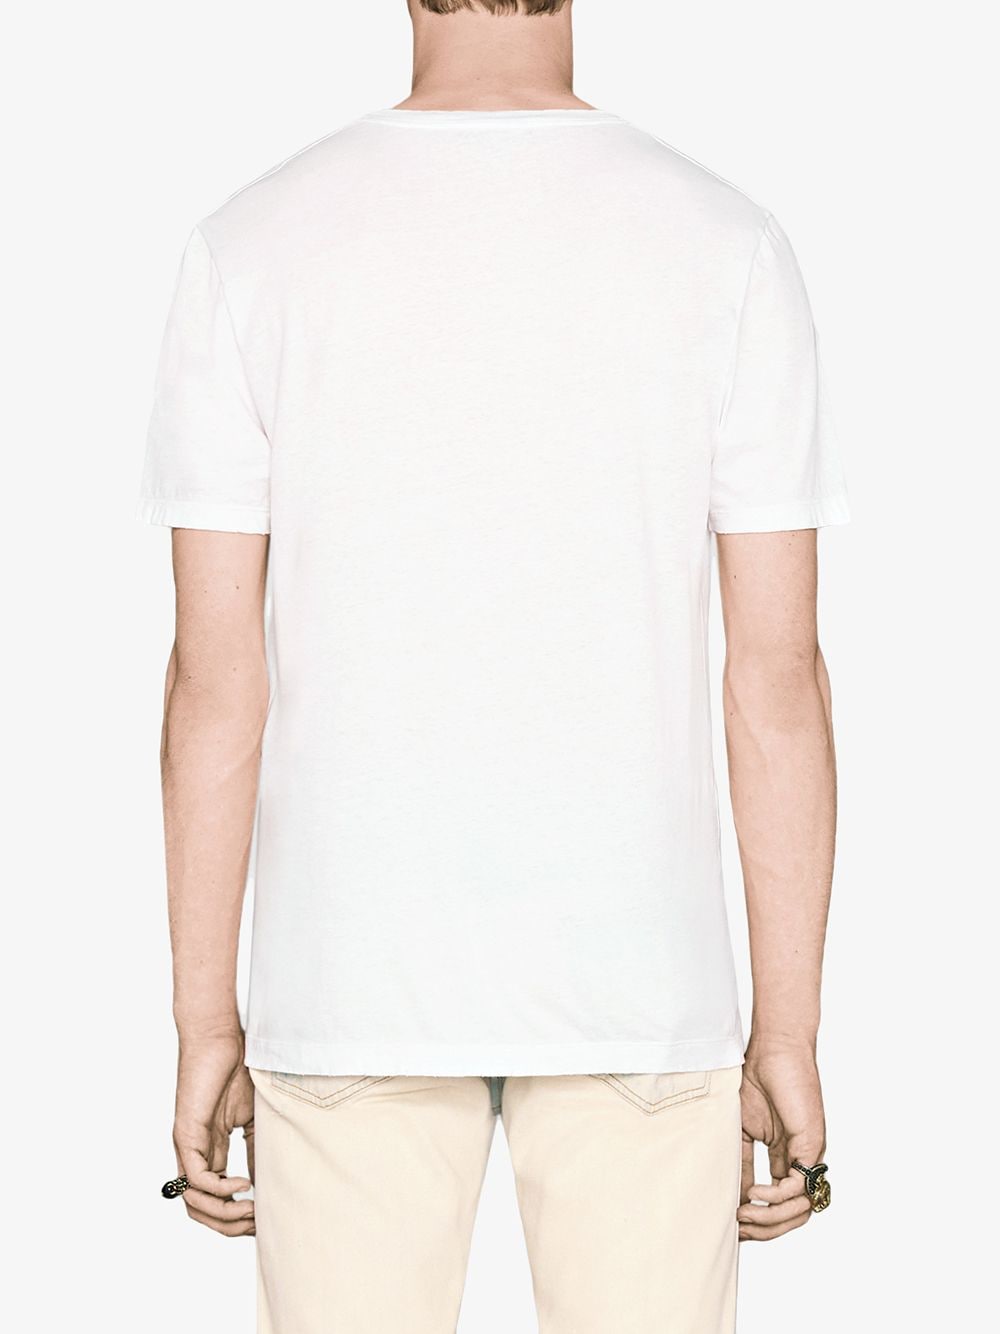 Gucci logo print cotton T-shirt